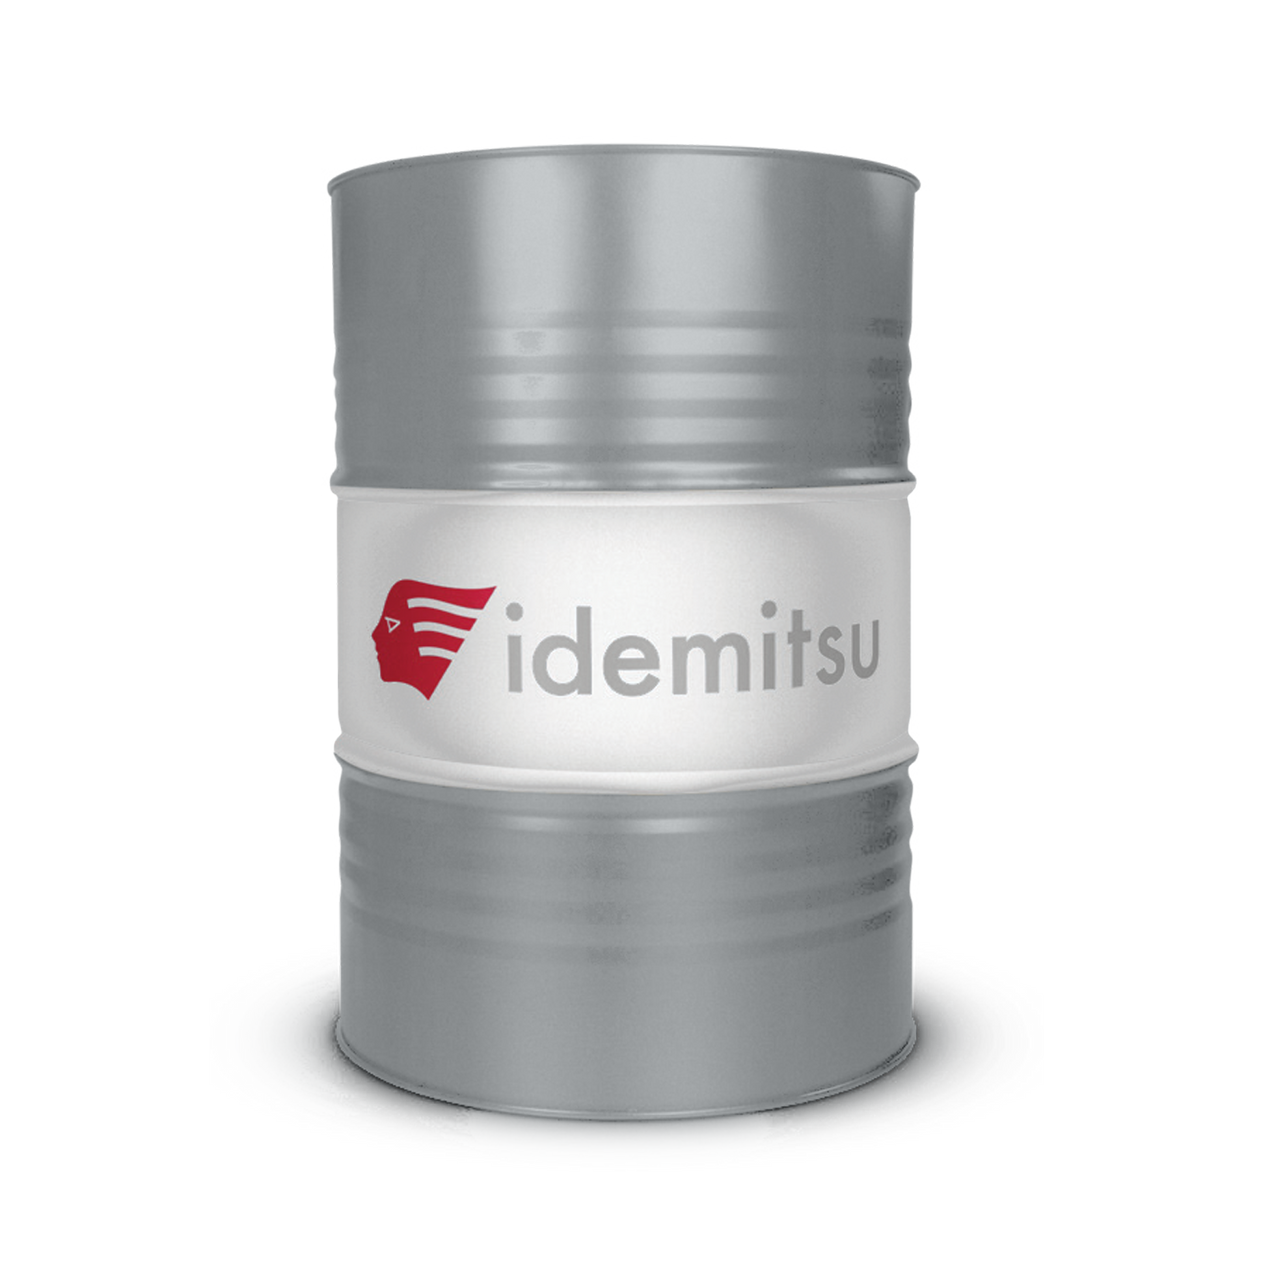 Idemitsu IFG 3 5W-20 Full Synthetic Engine Oil